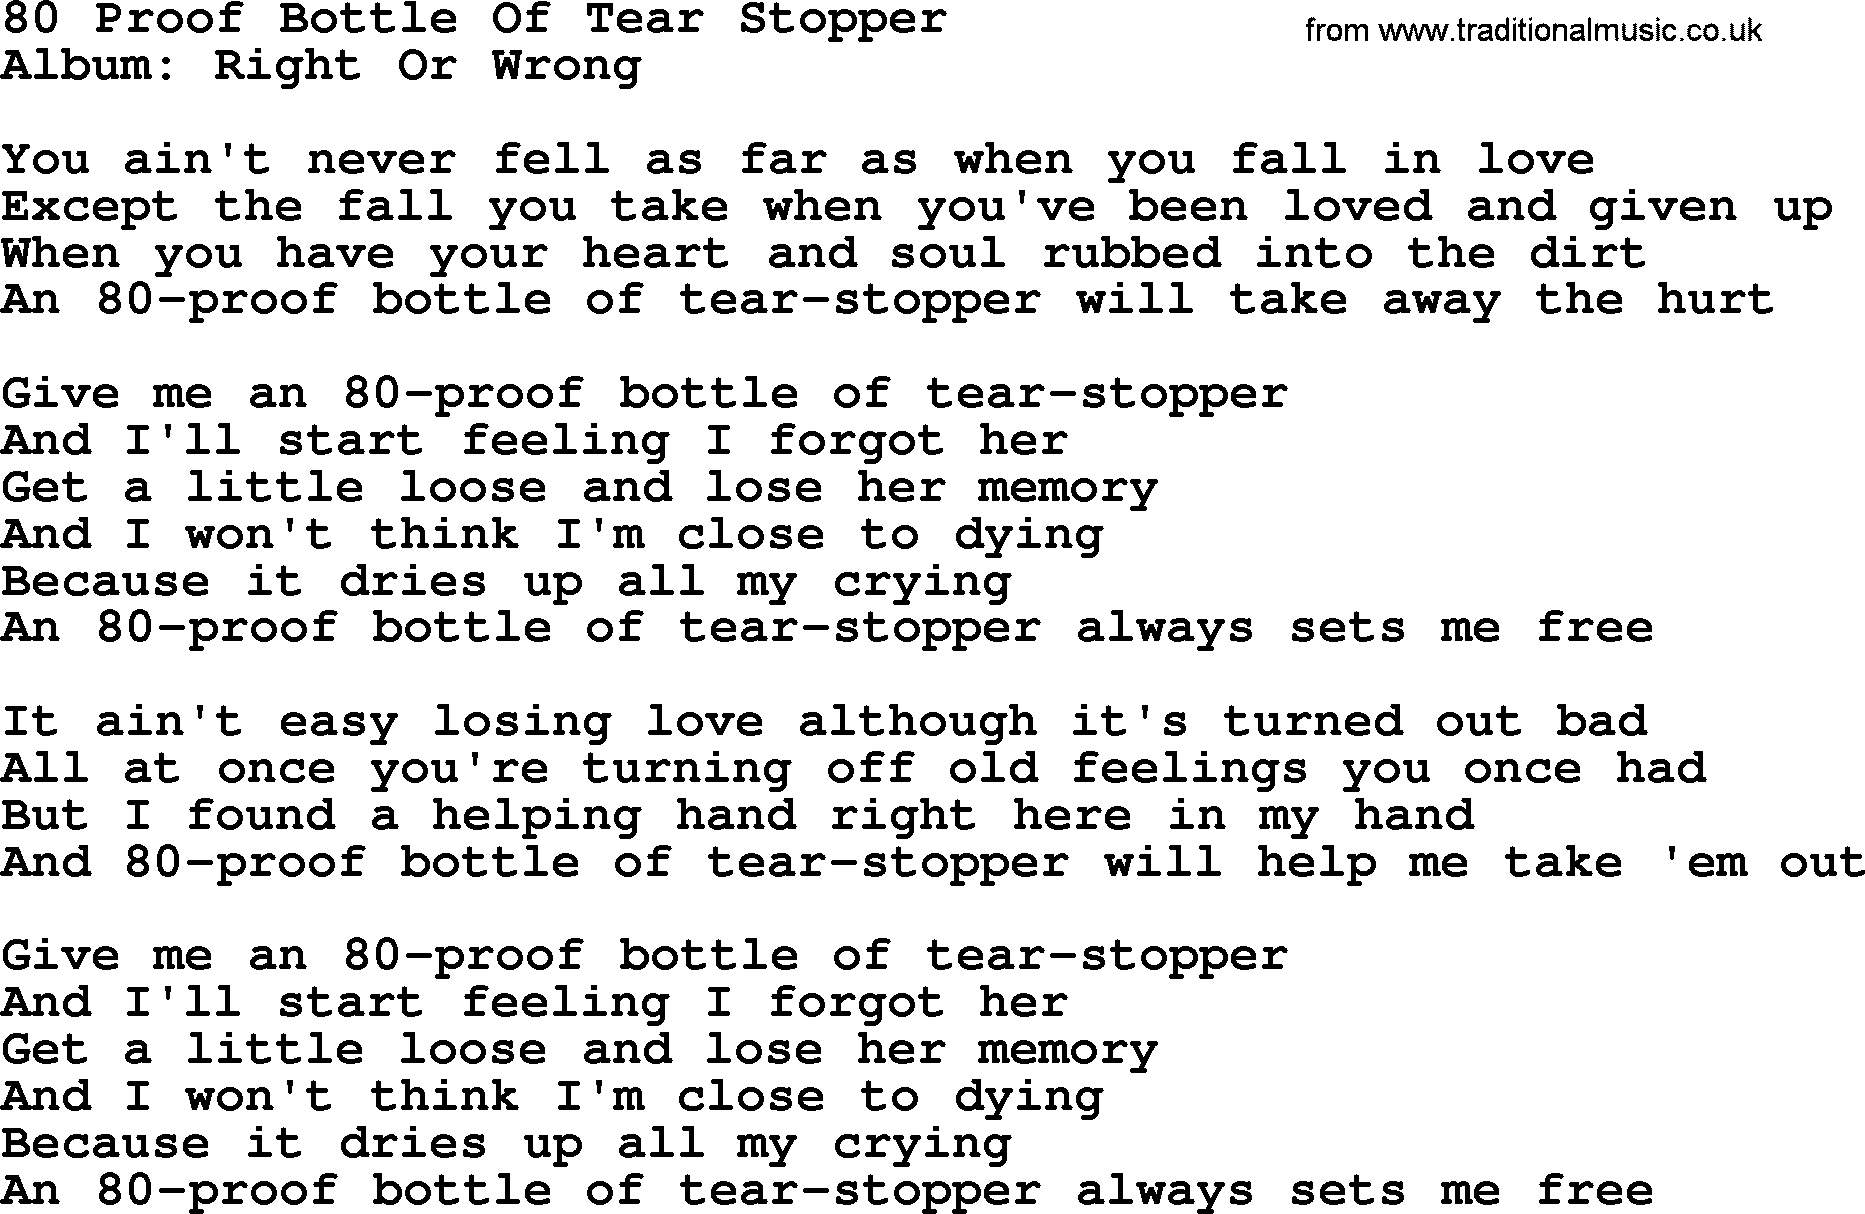 George Strait song: 80 Proof Bottle Of Tear Stopper, lyrics